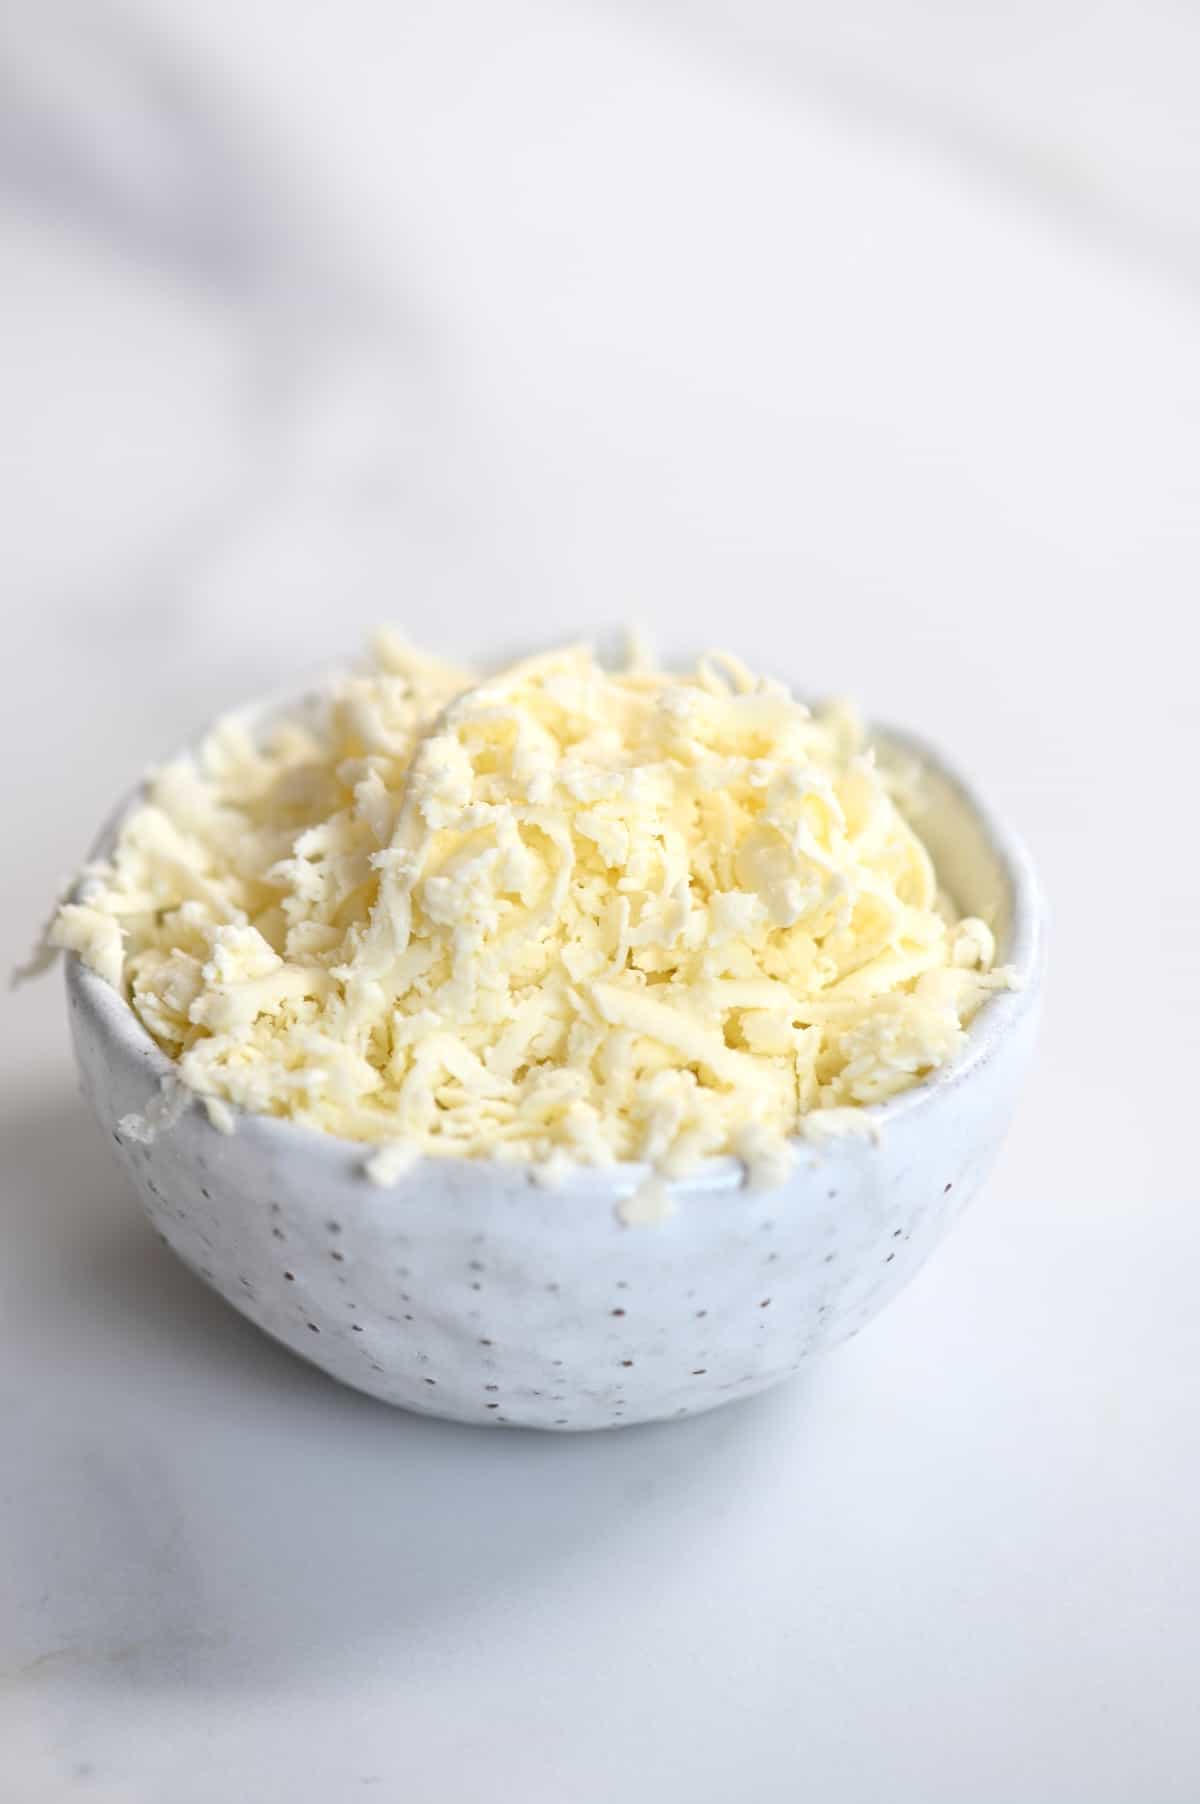 Homemade grated mozzarella cheese in a bowl